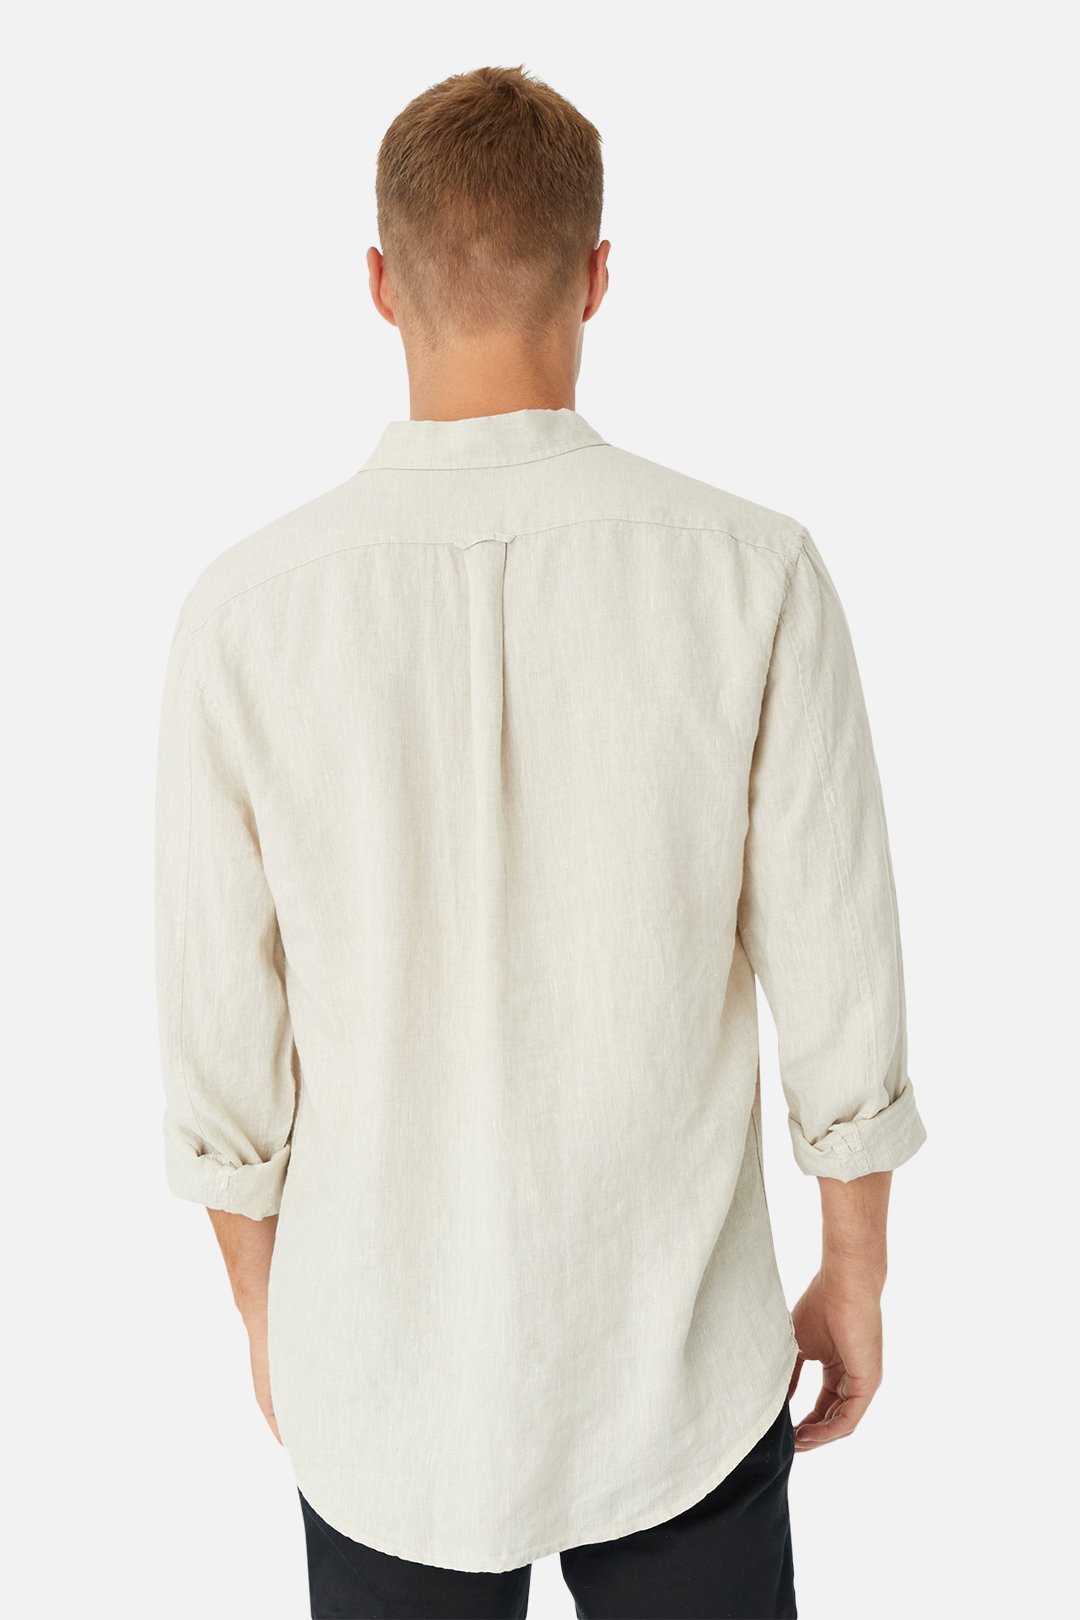 INDUSTRIE - The Tennyson Linen L/S Shirt - OATMEAL